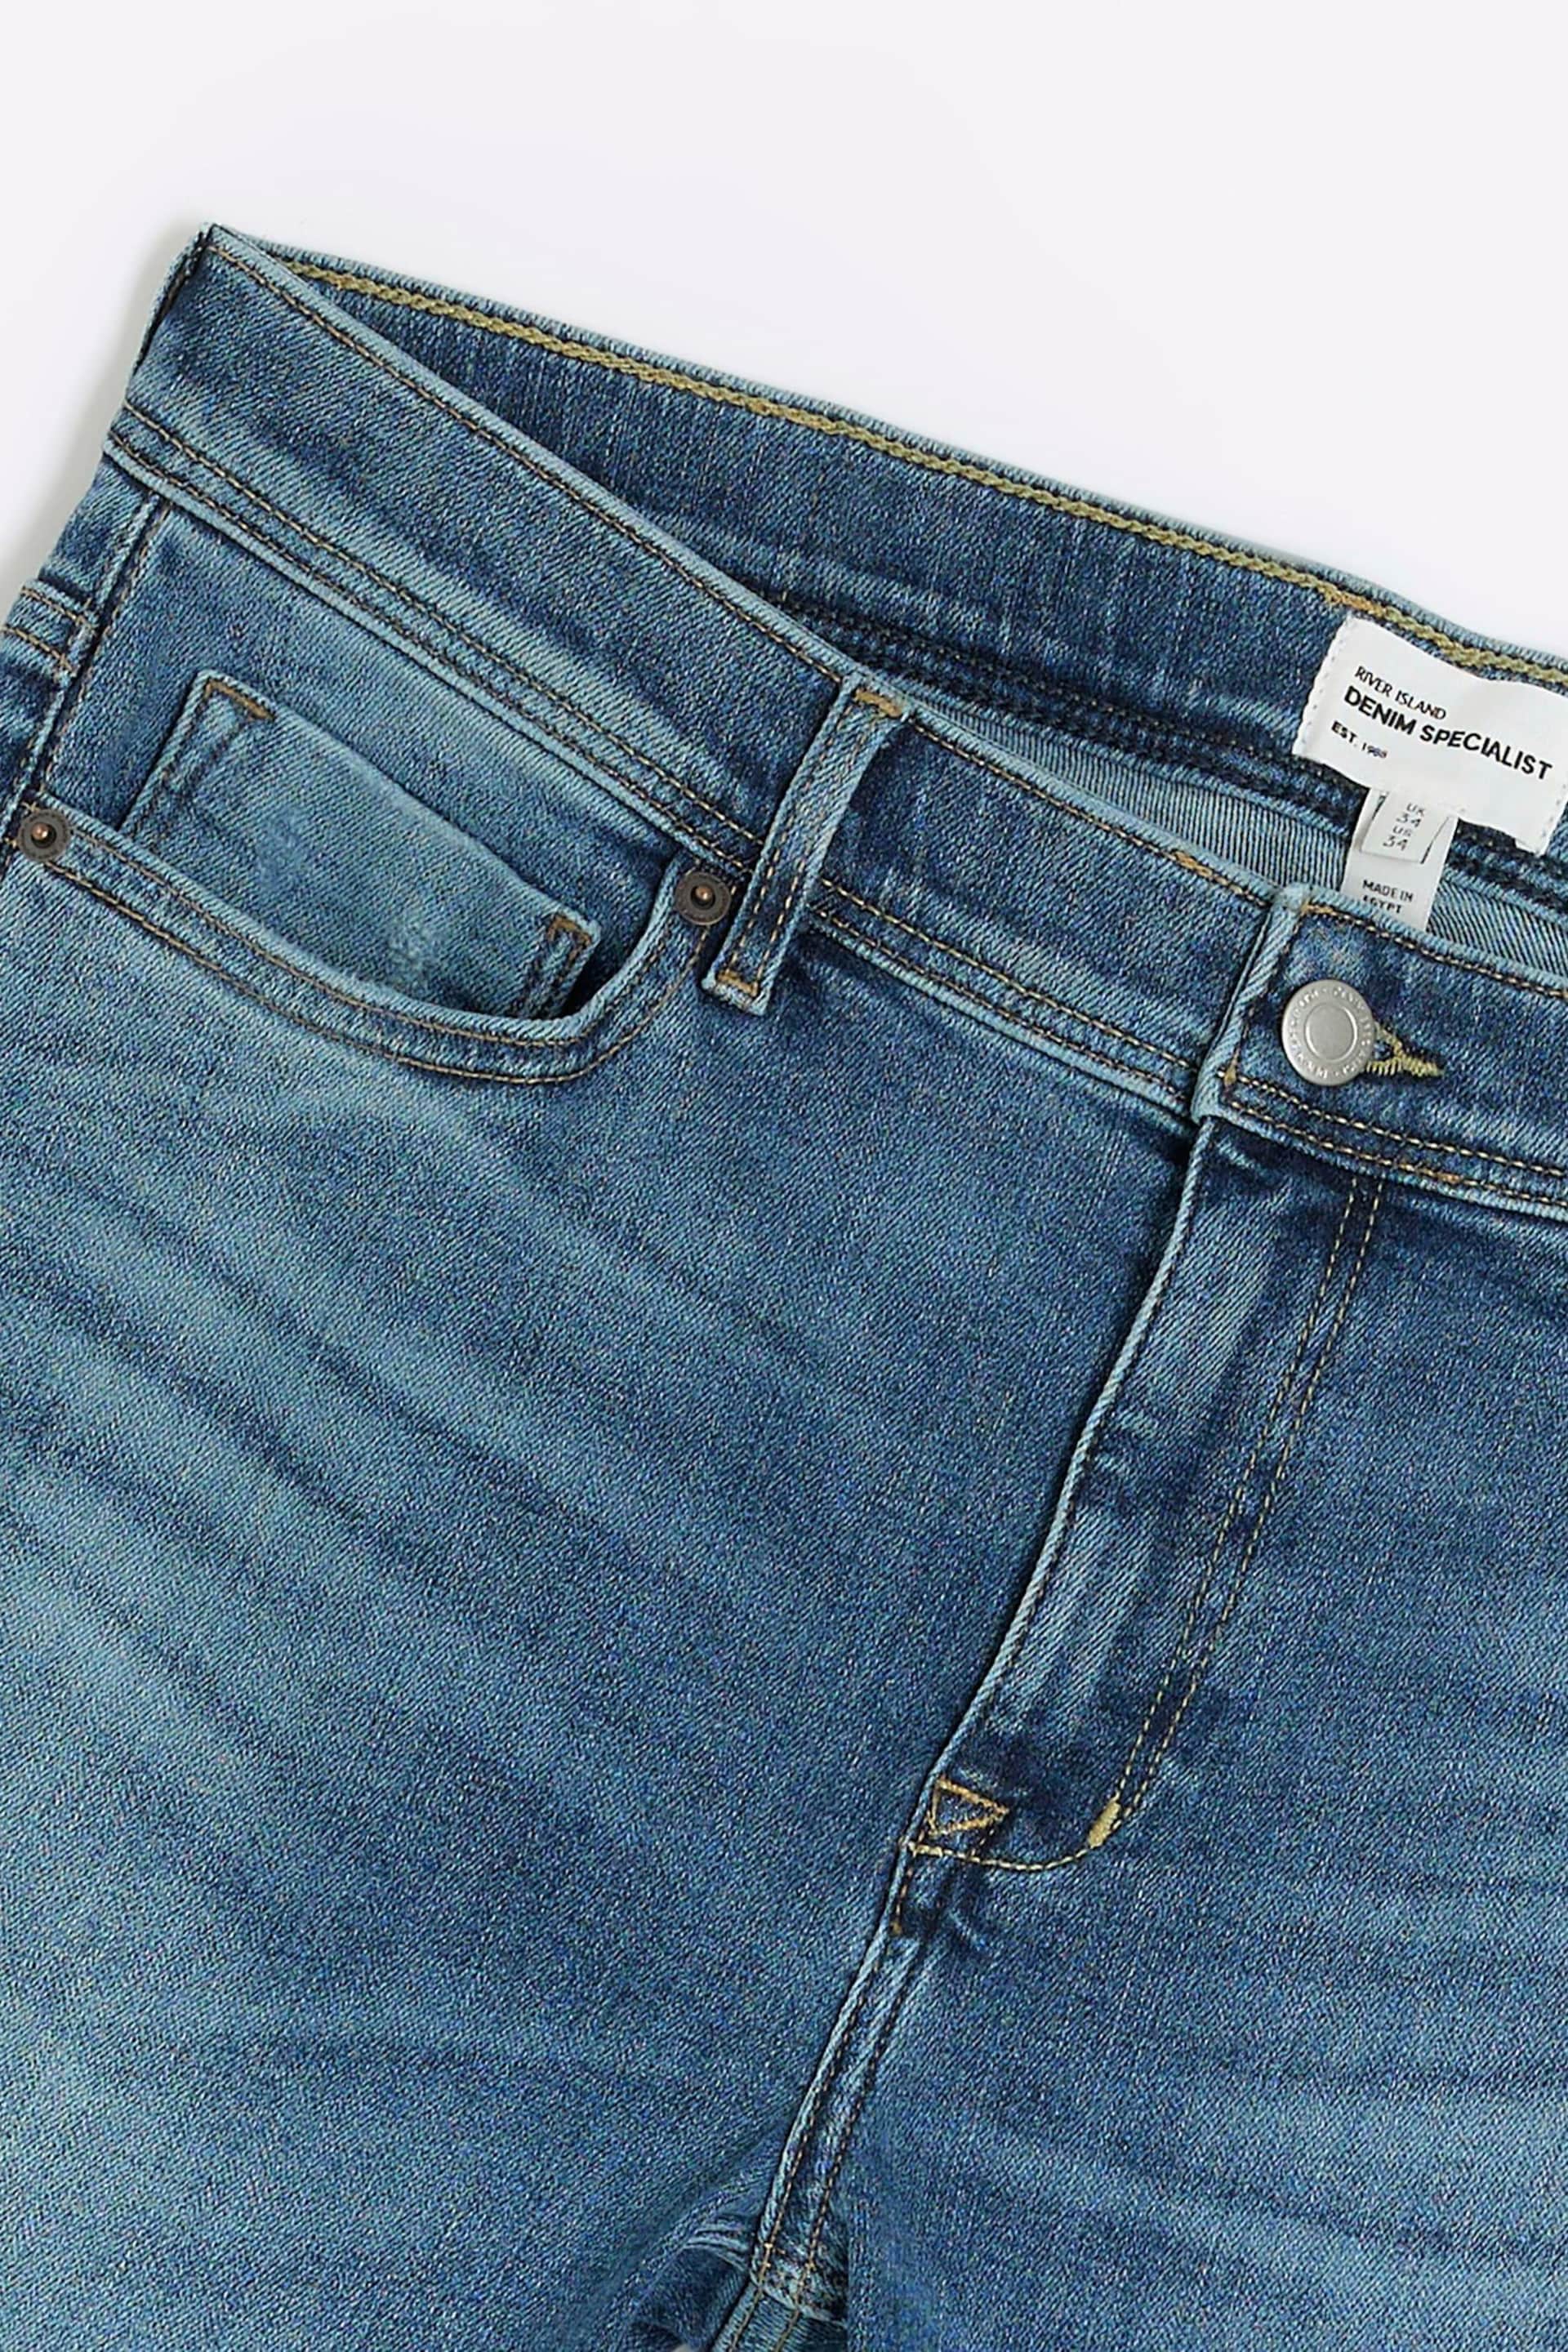 River Island Blue Medium Wash Spray On Skinny Jeans - Image 6 of 6